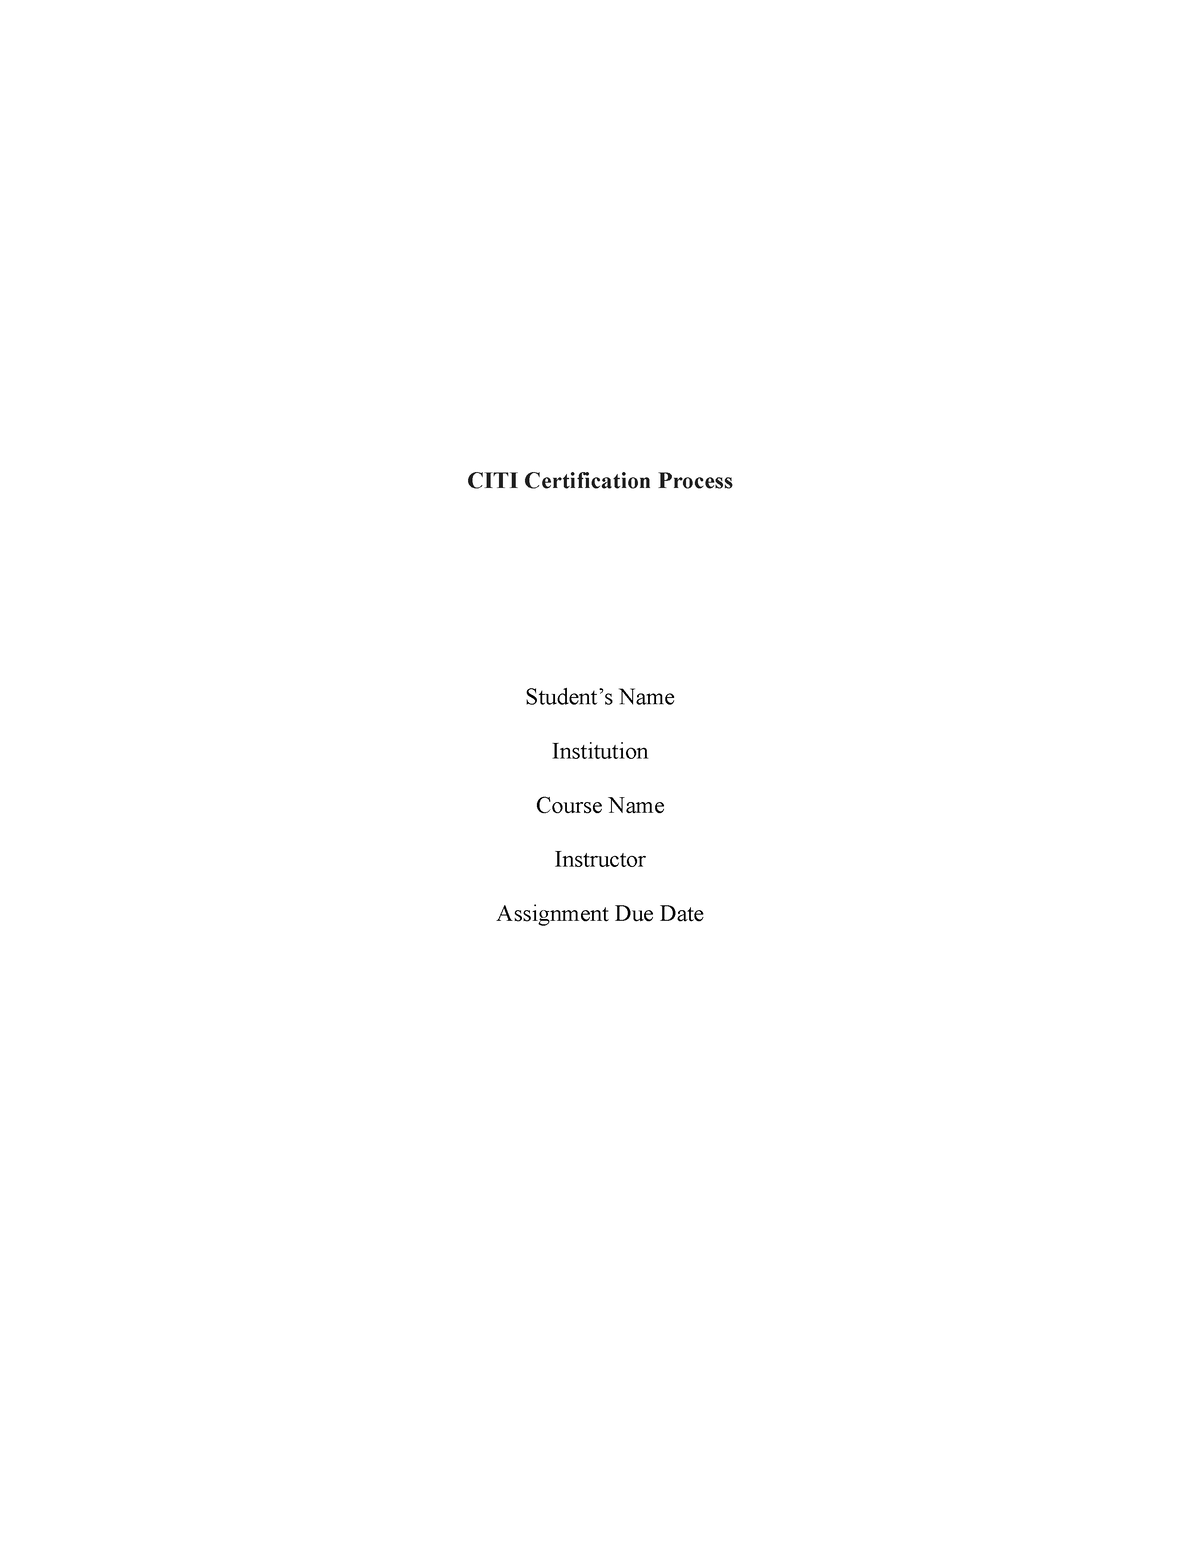 CITI Certification Process CITI Certification Process Student s Name